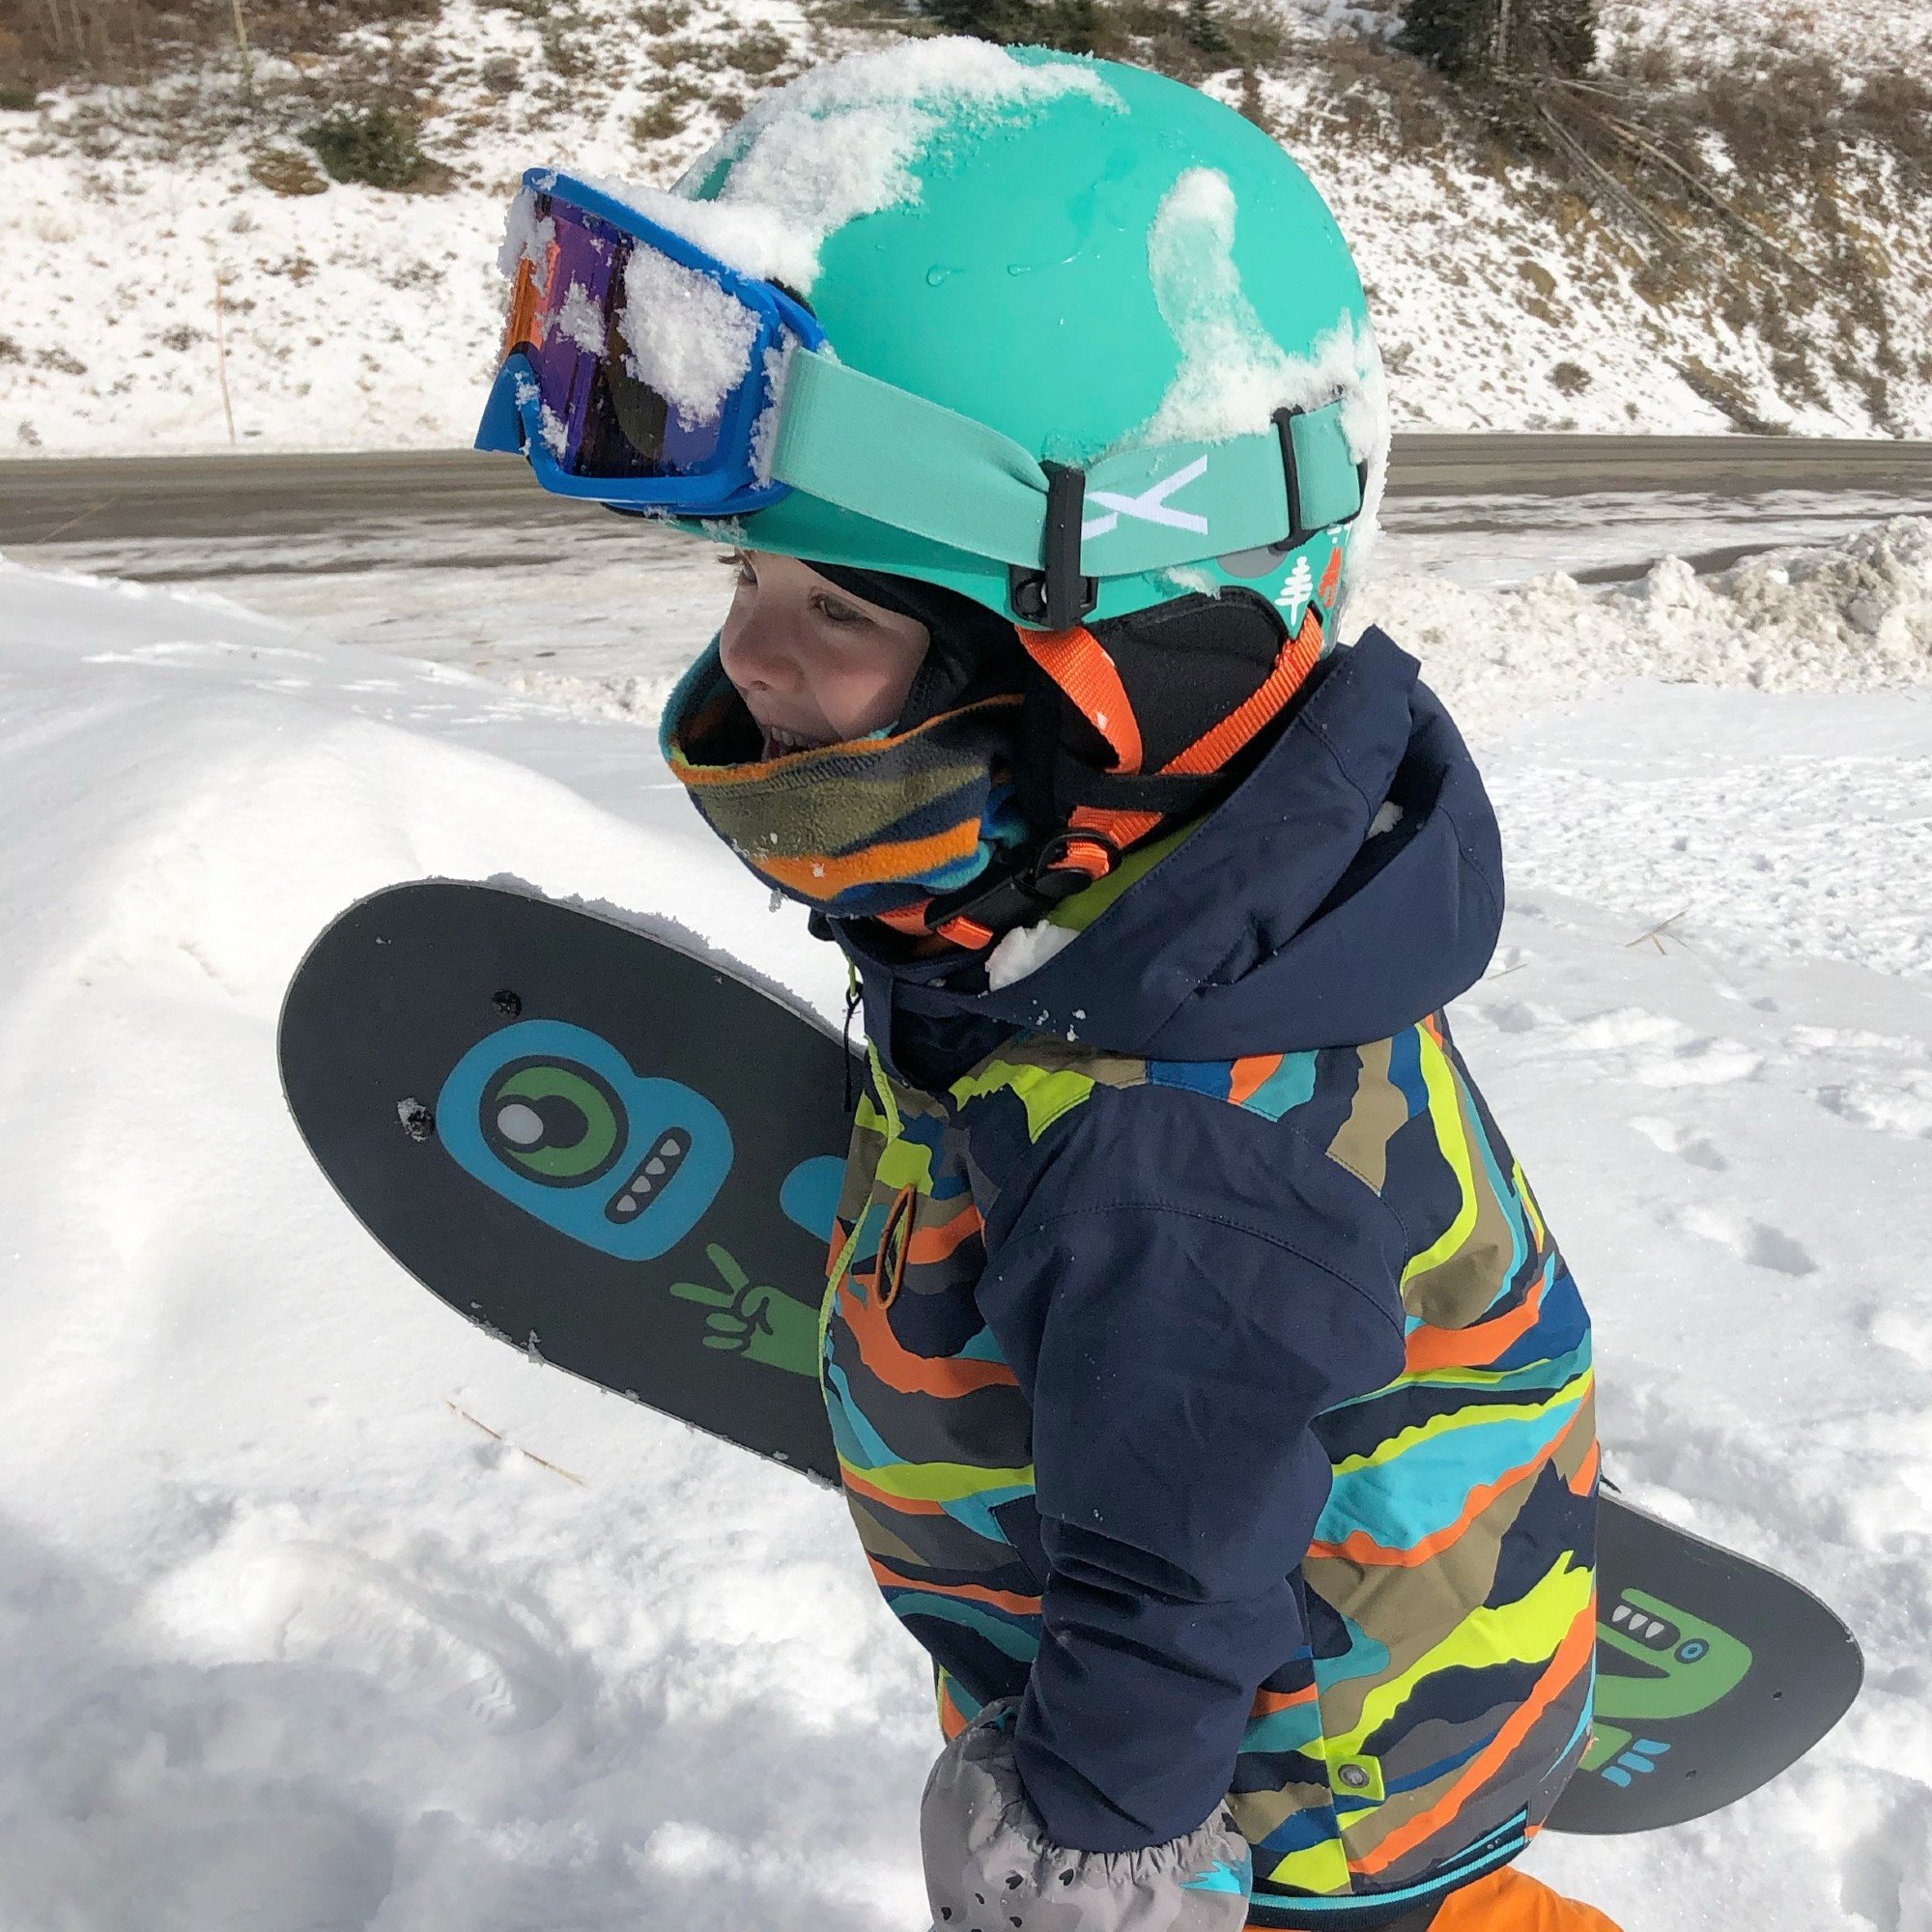 Anon Define Kids' Ski/Snowboard Helmet with Goggles